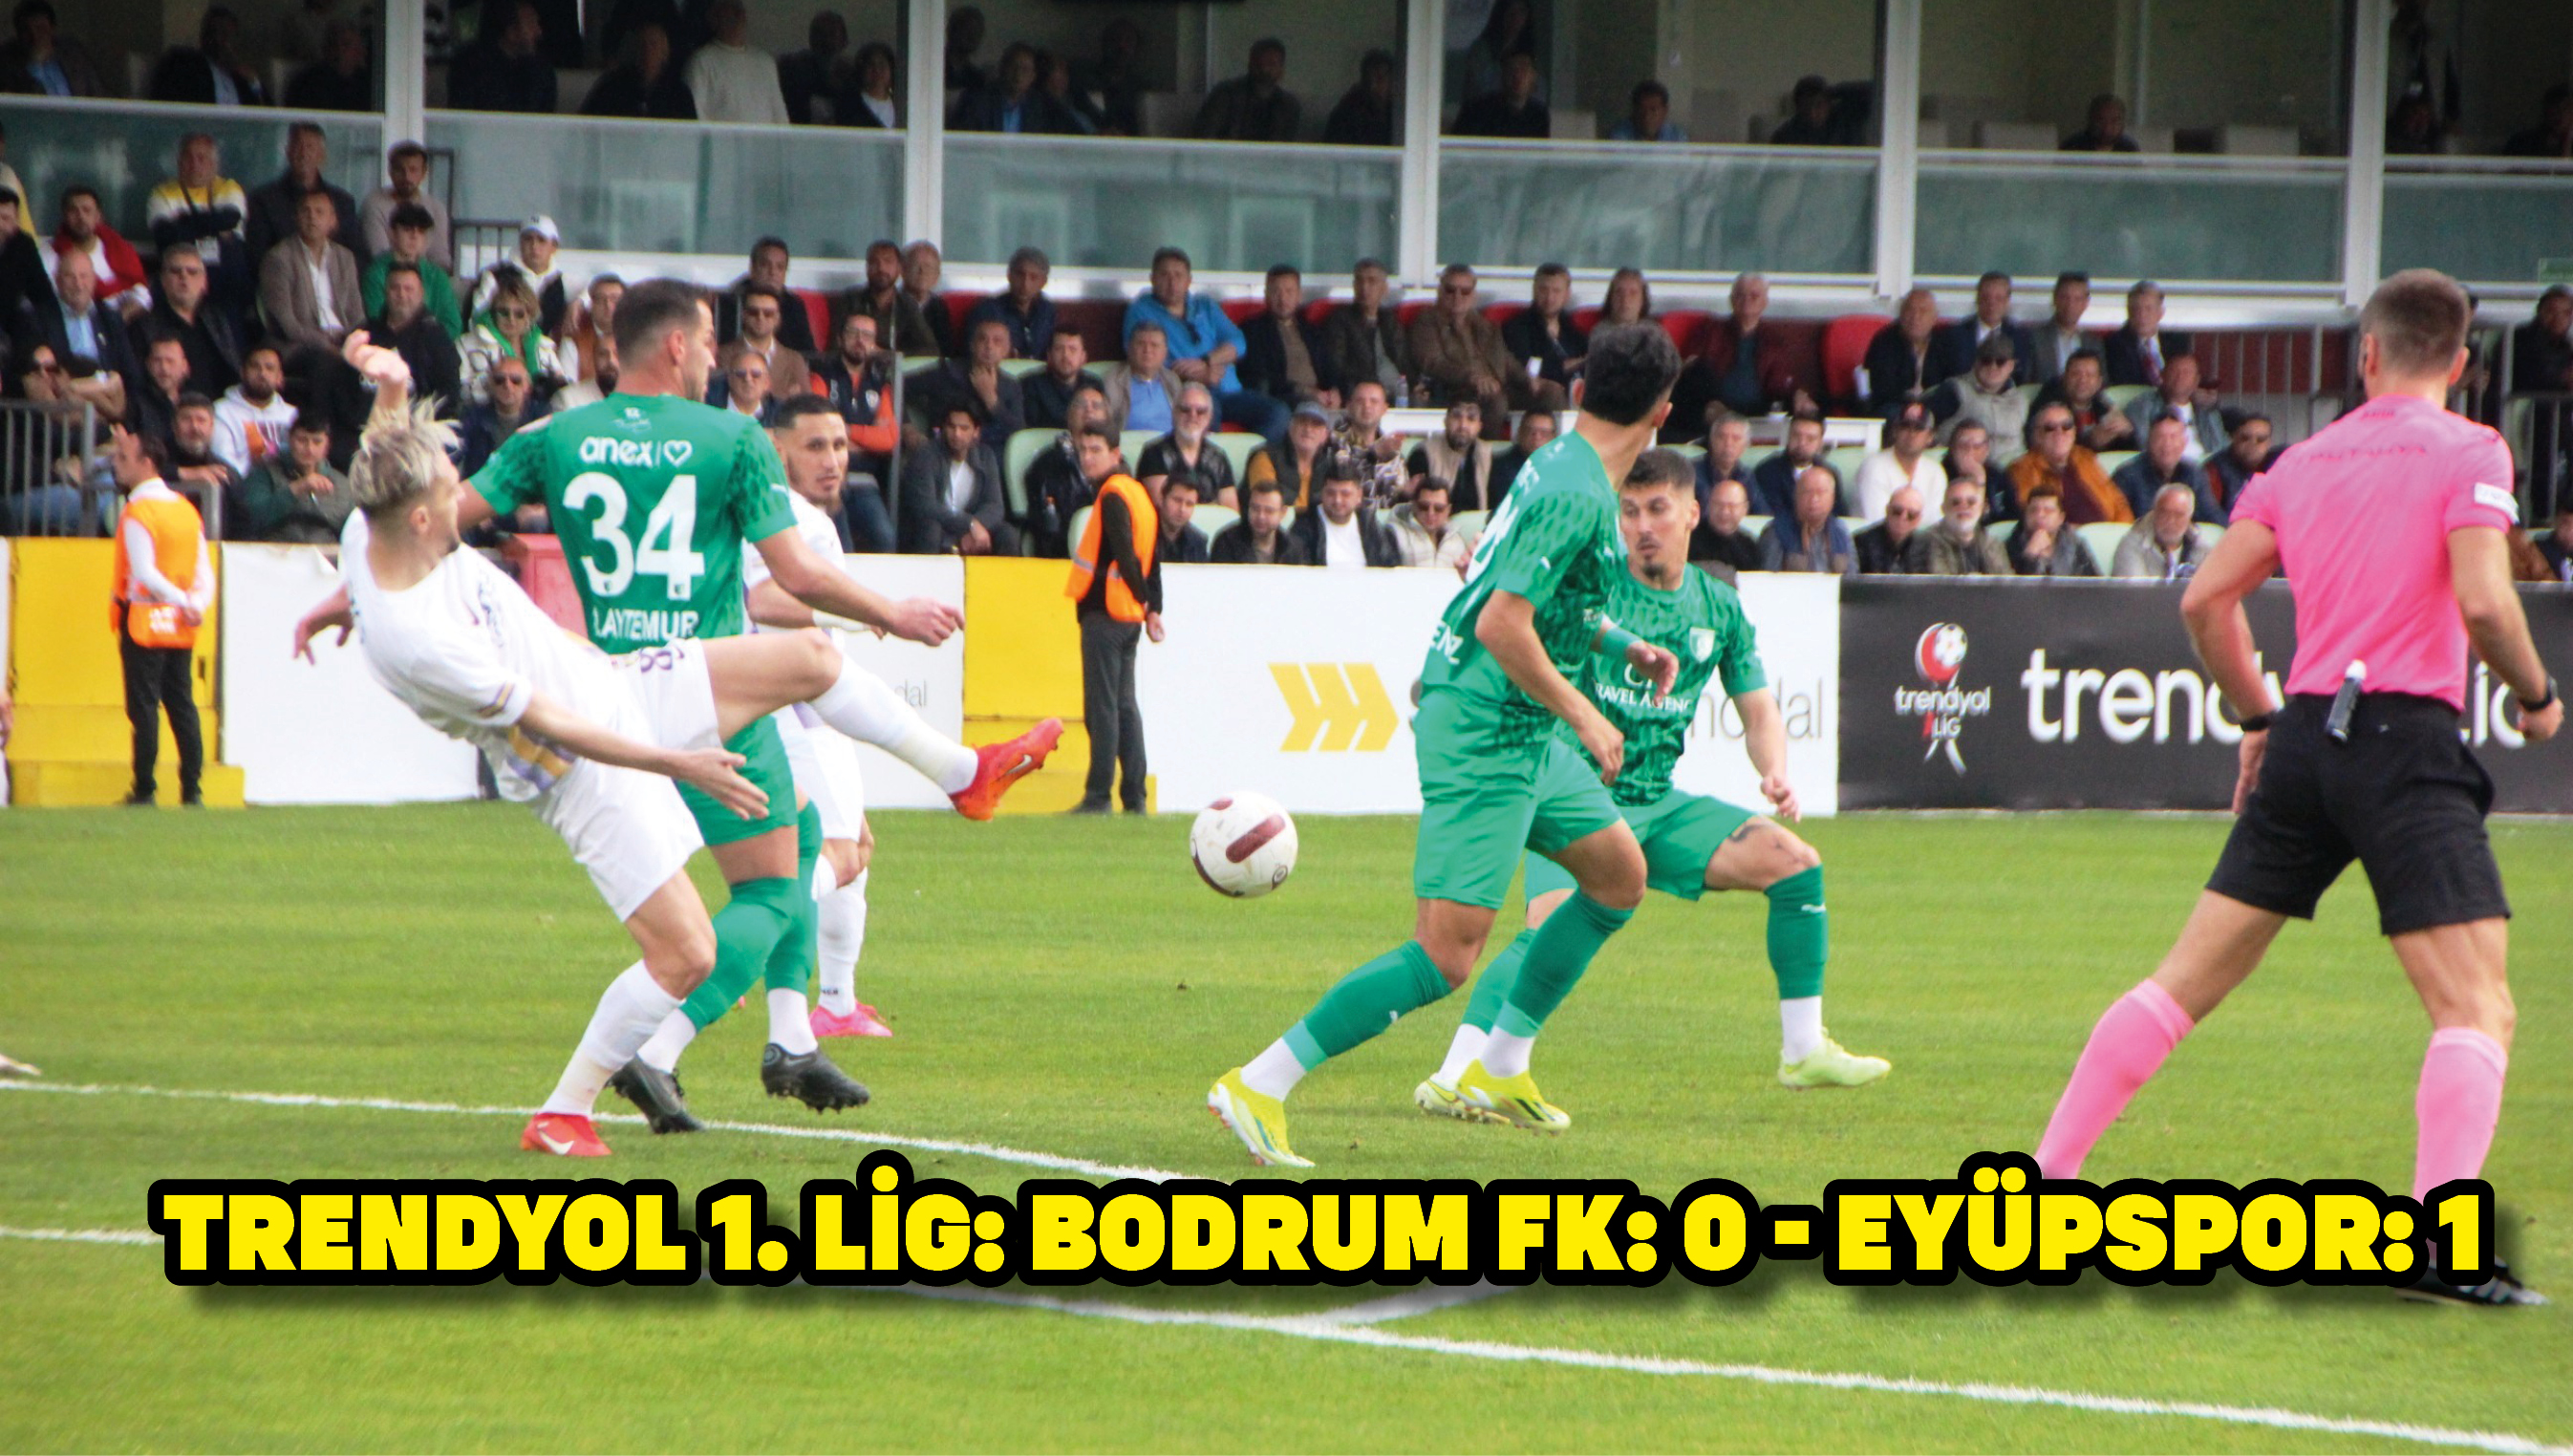 Trendyol 1. Lig: Bodrum FK: 0 - Eyüpspor: 1